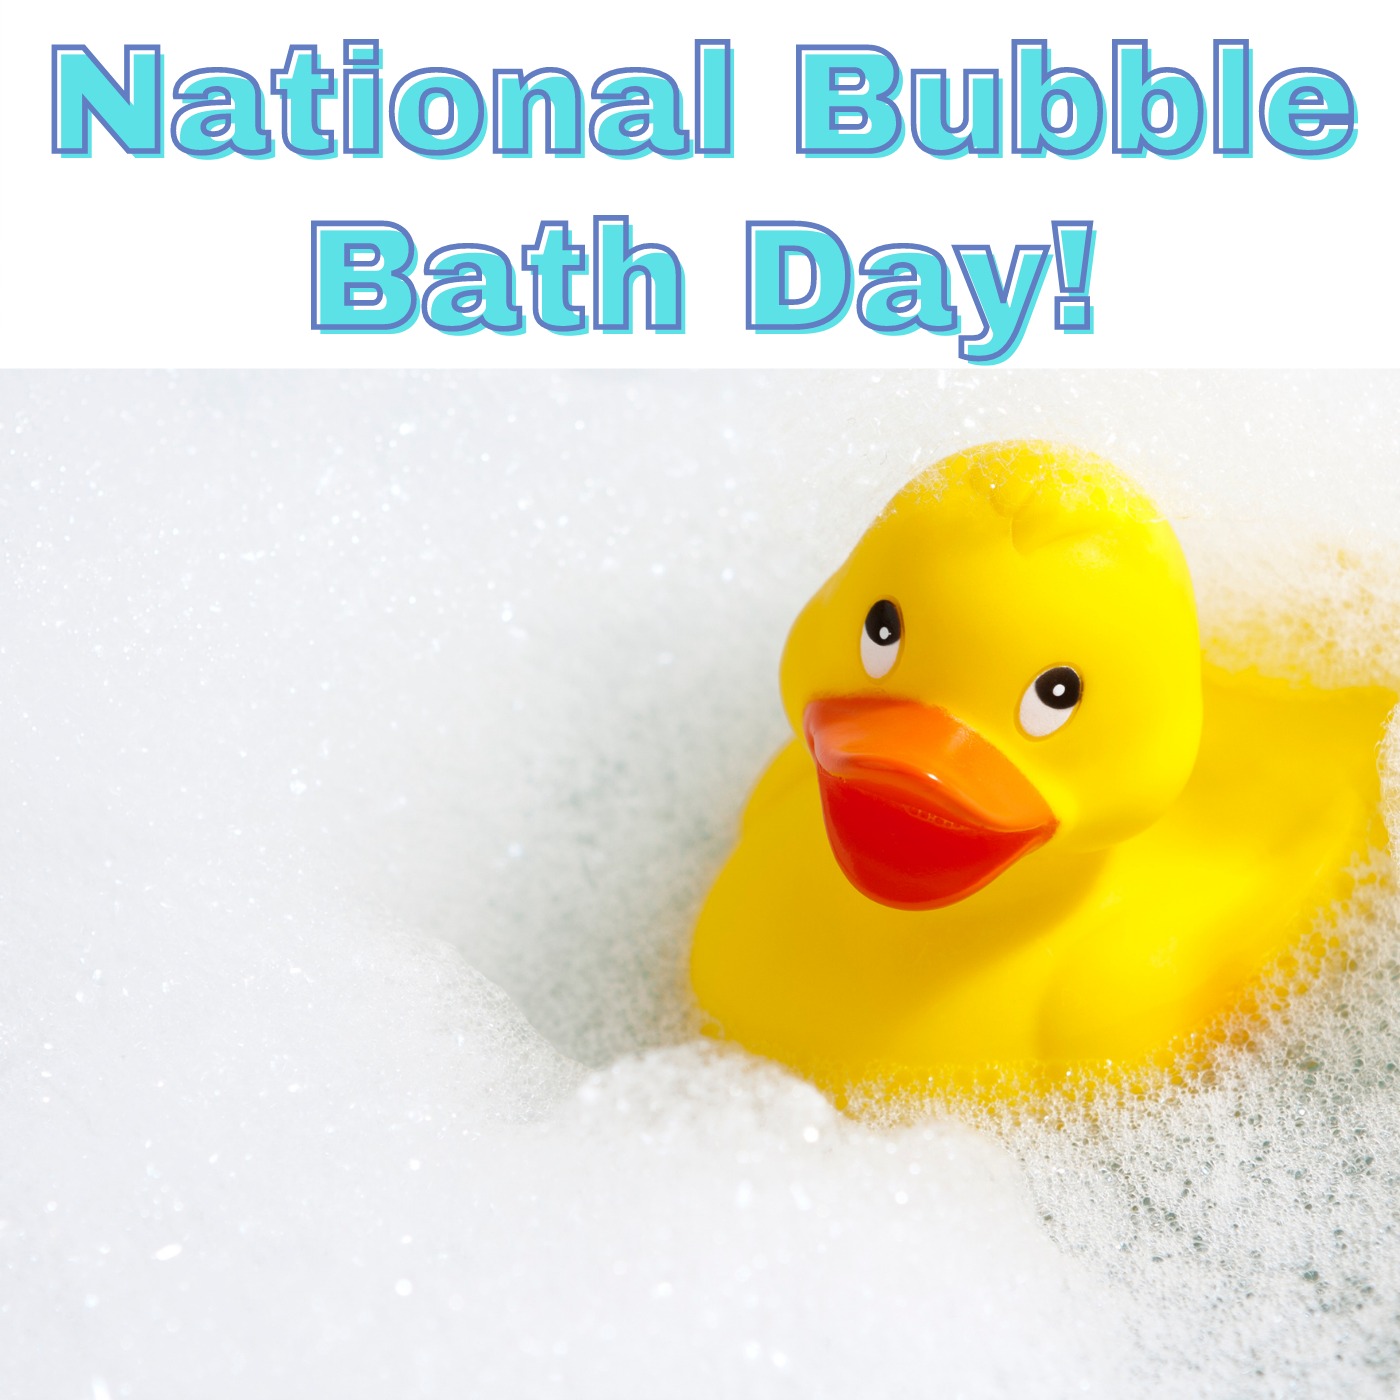 Episode #060 National Bubble Bath Day! Image